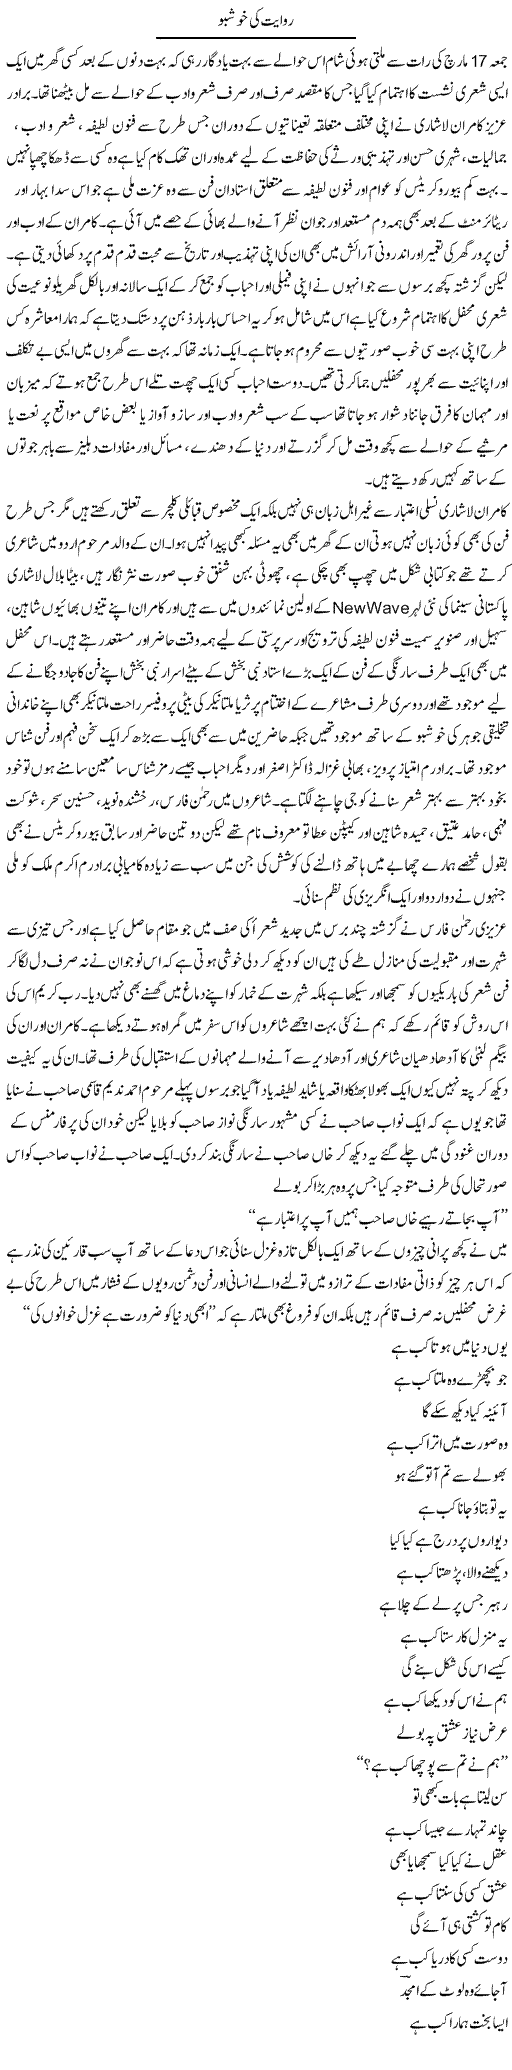 Riwayat Ki Khushbu | Amjad Islam Amjad | Daily Urdu Columns